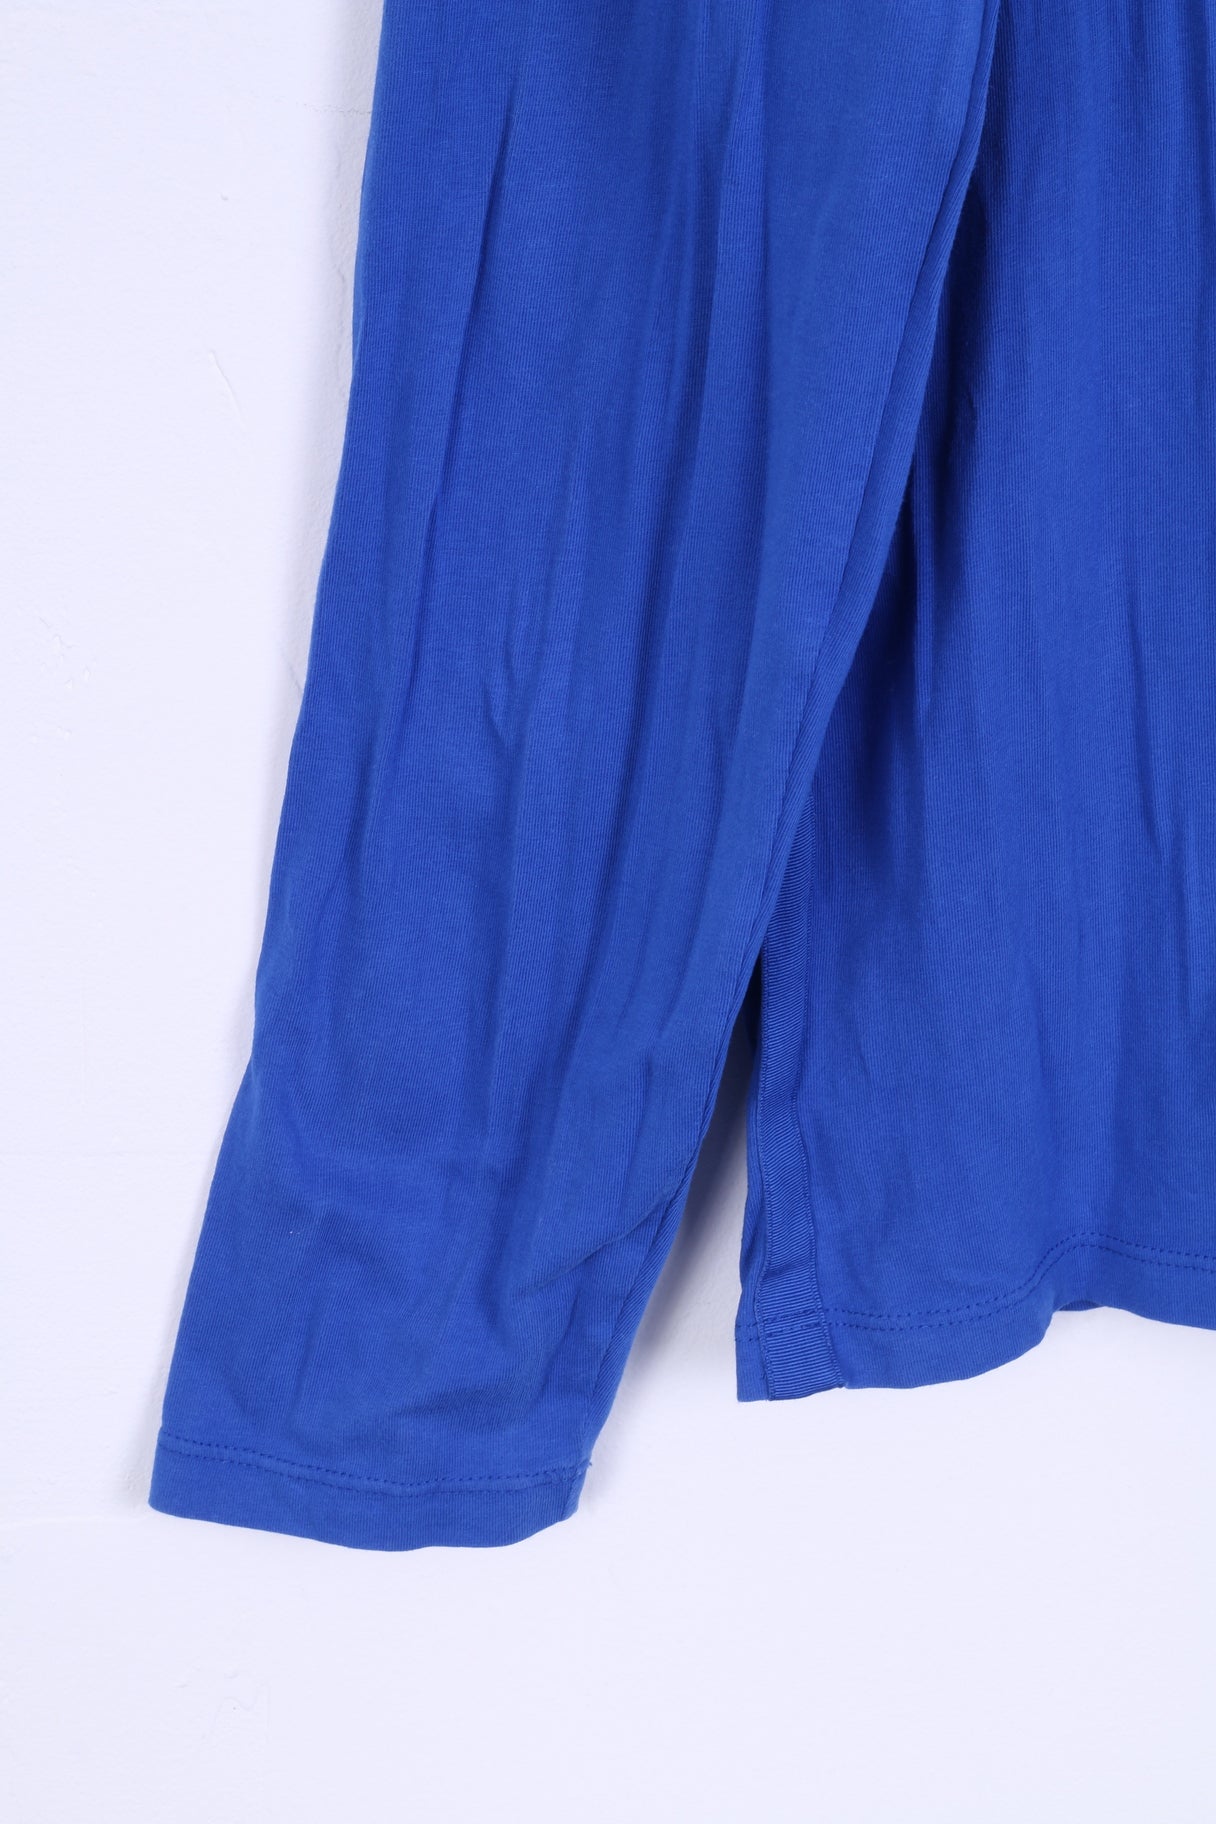 Armani Exchange Mens S Shirt Blue Long Sleeve Stretch Cotton Crew Neck